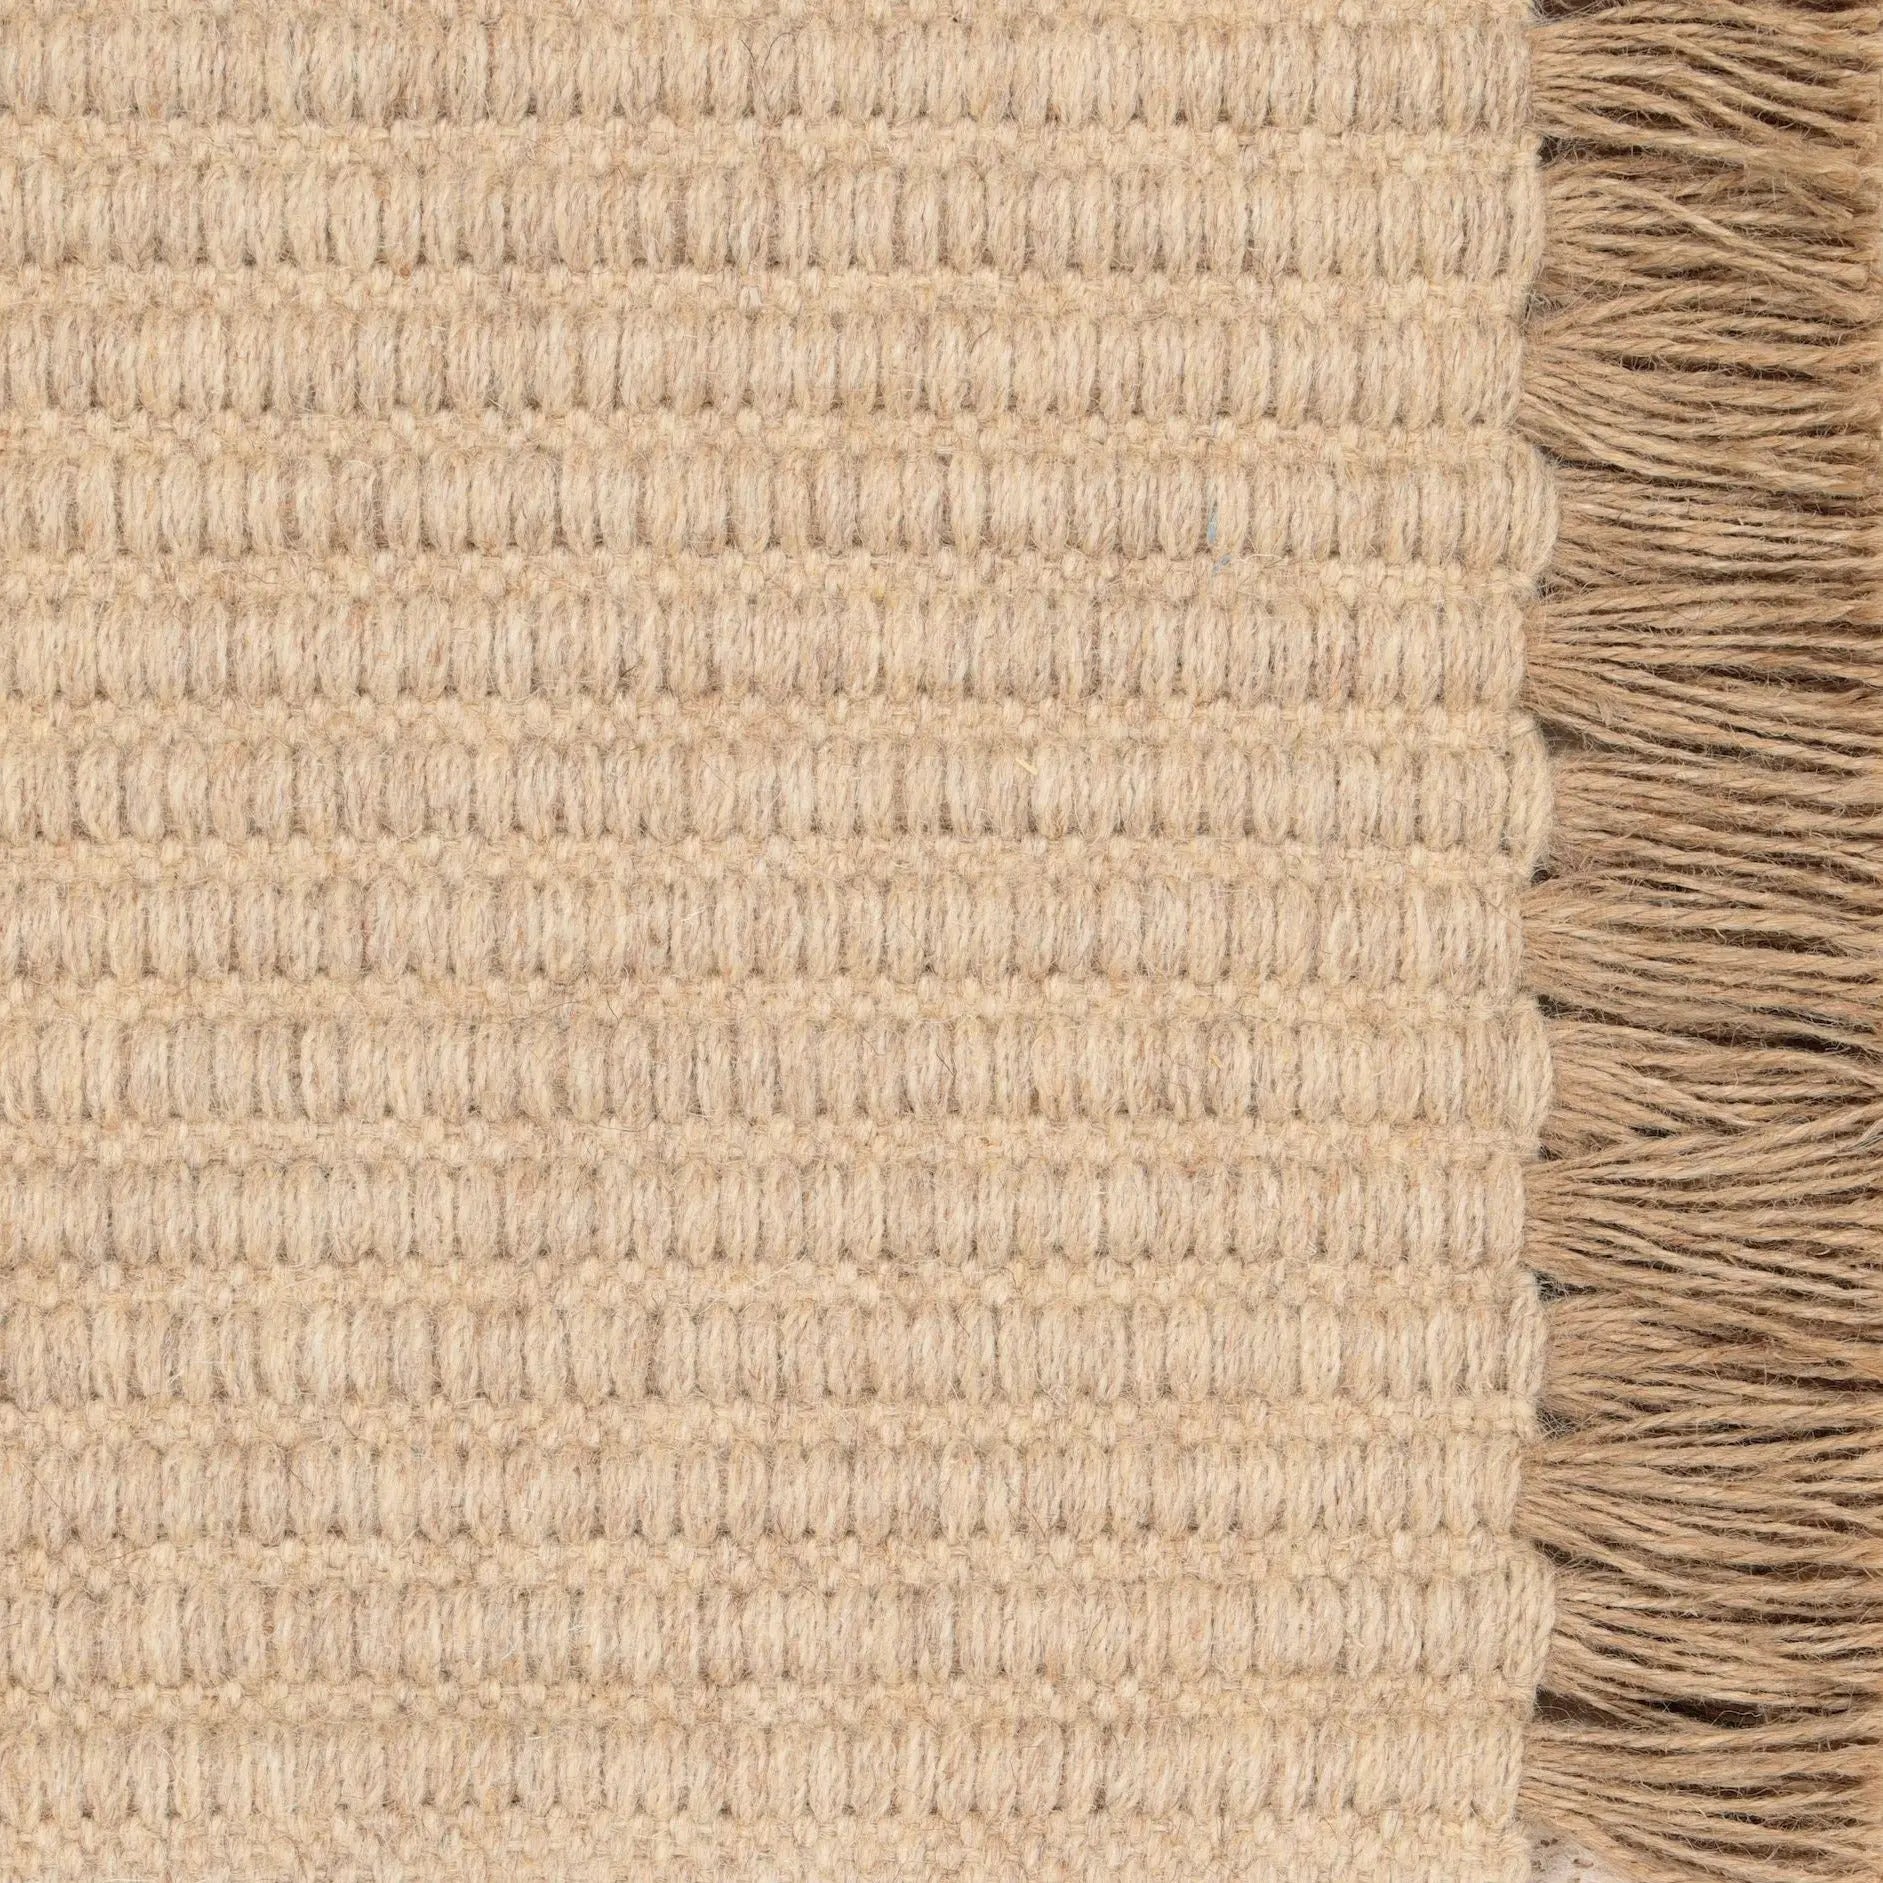 Tasseled Wool Oatmeal Sample